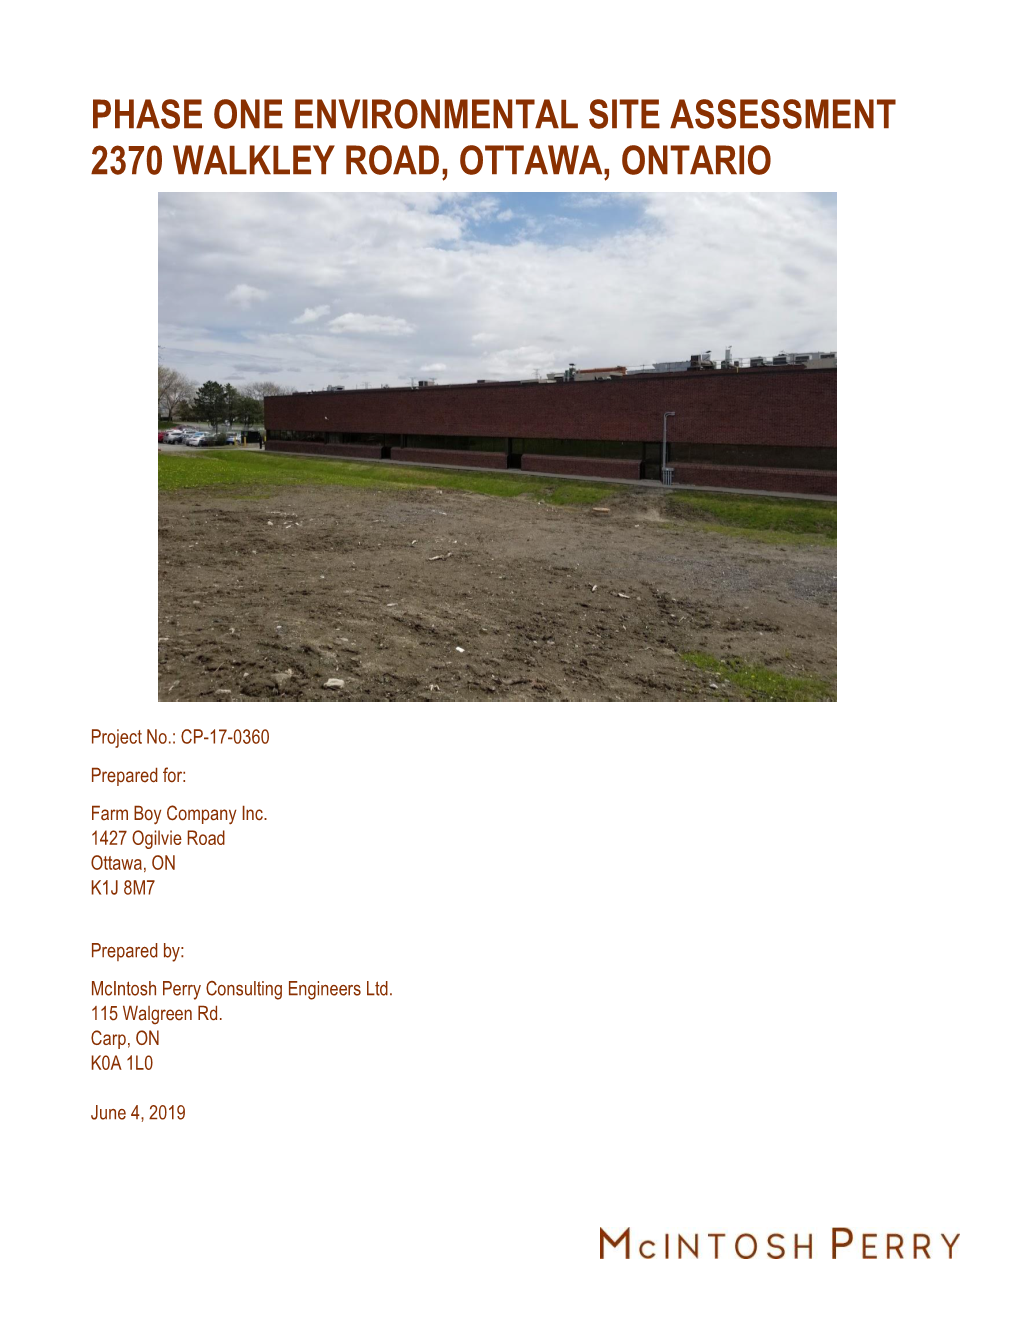 Phase ONE Environmental Site Assessment 2370 Walkley Road, Ottawa, Ontario CP-17-0360